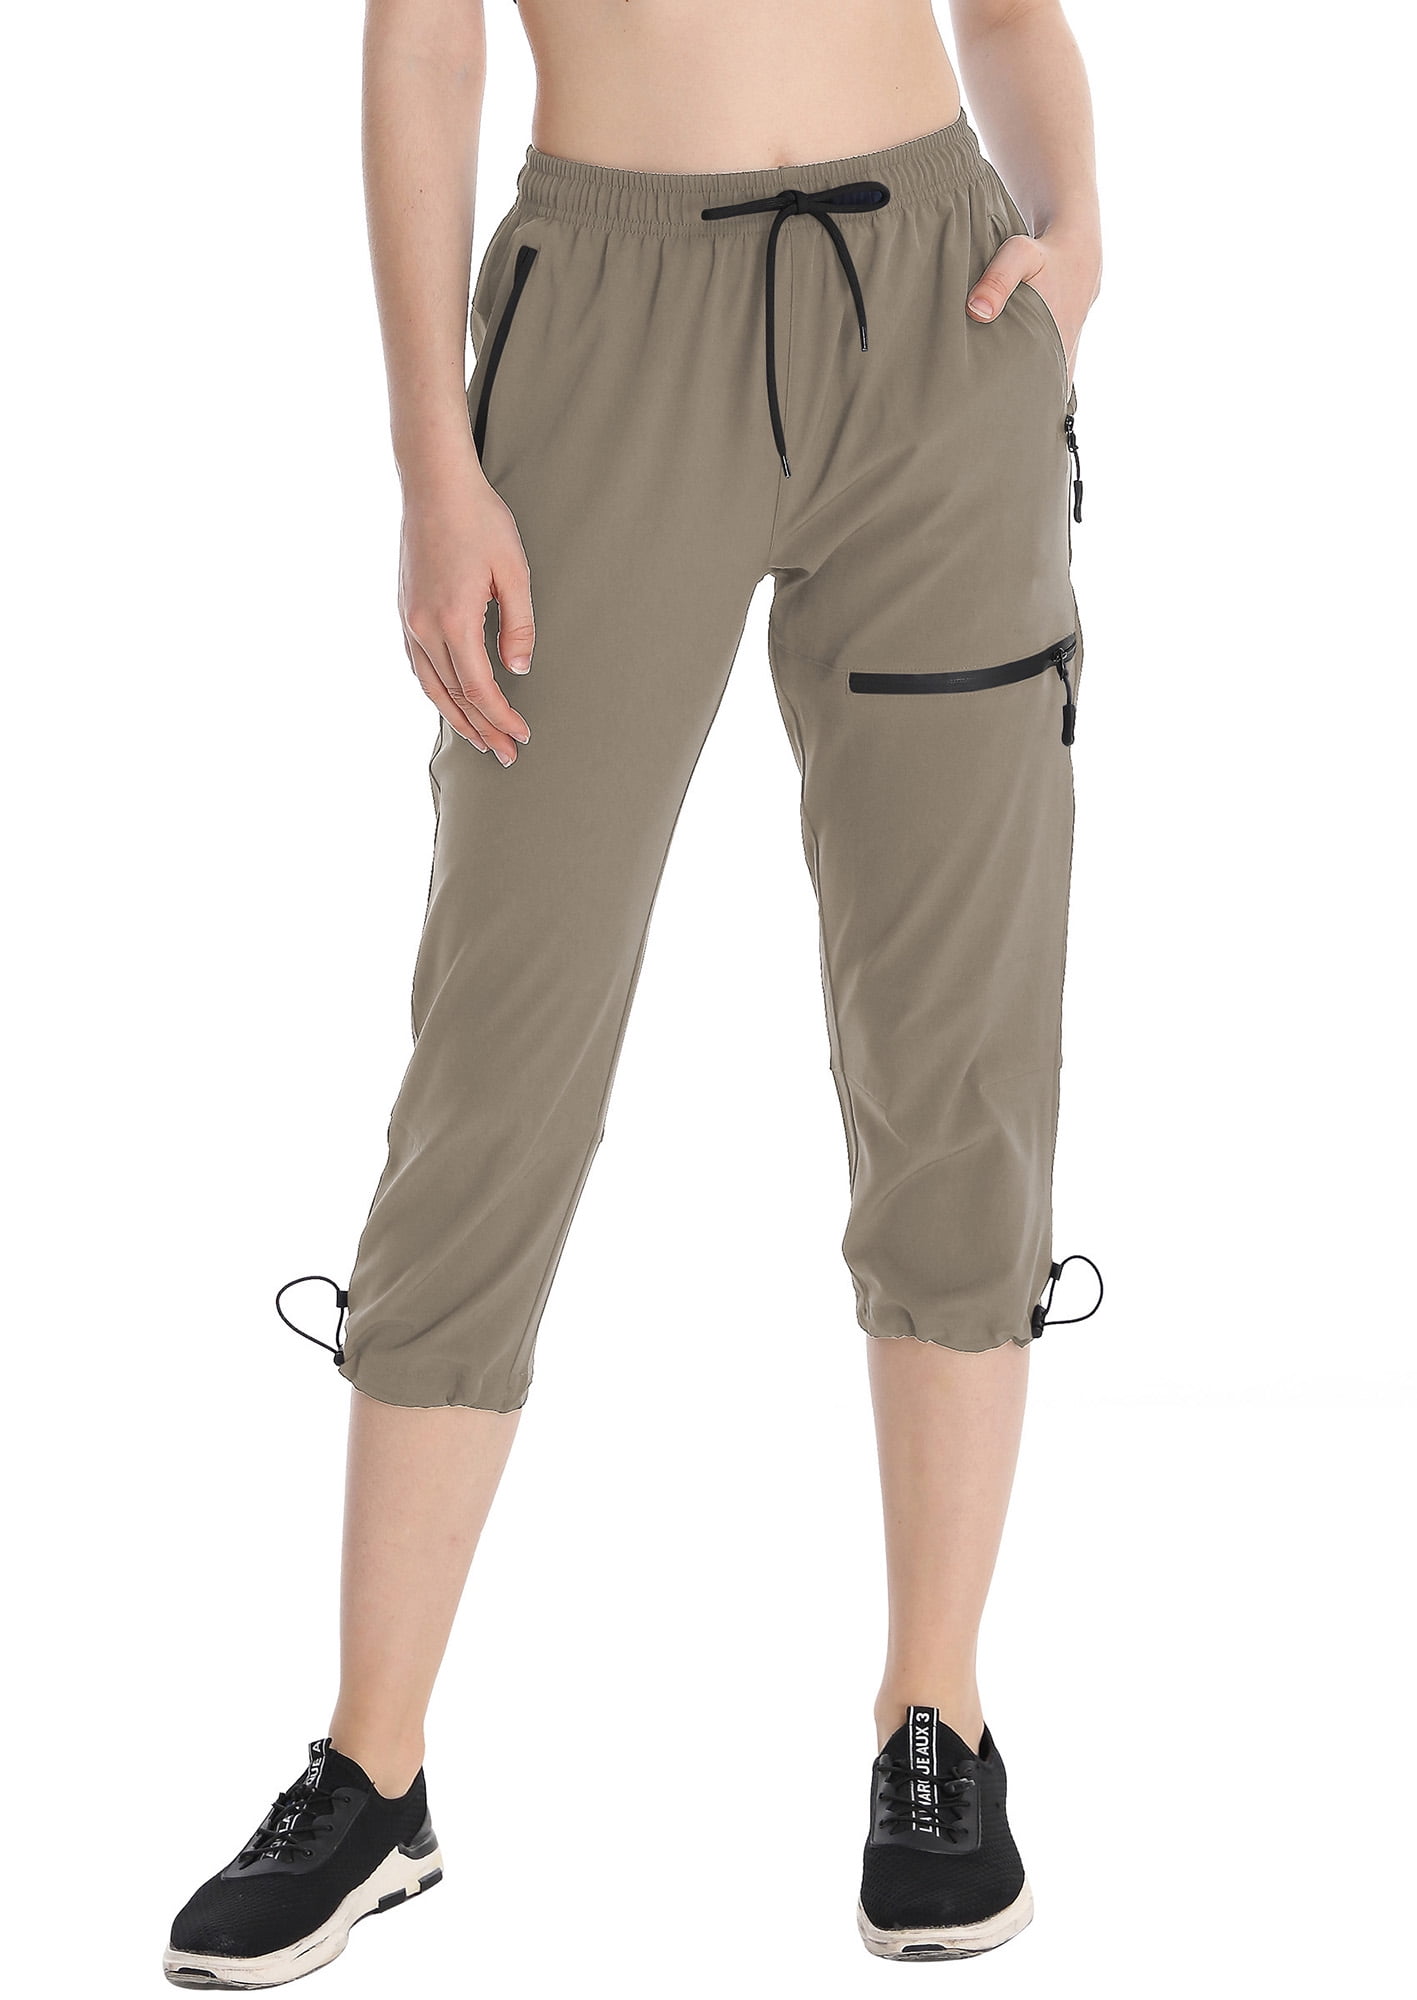 Baleaf BALEAF Women's Hiking Pants Quick Dry Water Resistant